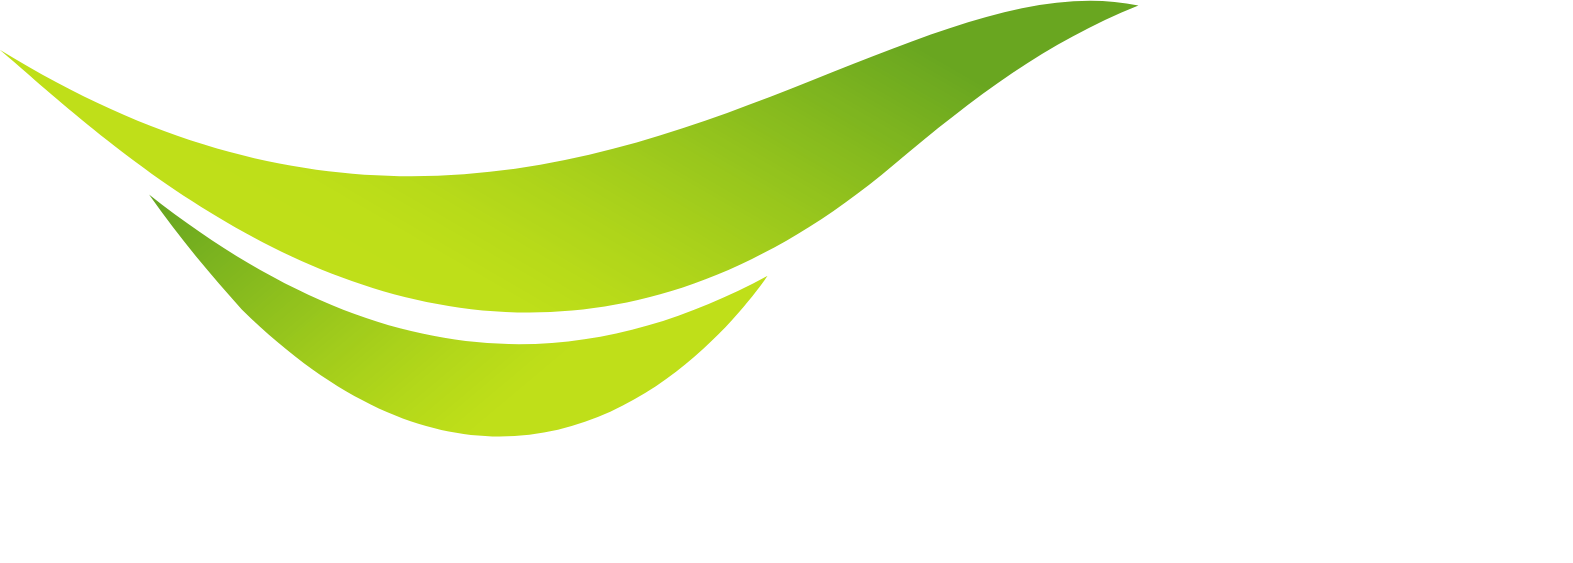 AIS Group LLC - Airline/Aviation - Aviation Innovative Solutions Group |  LinkedIn